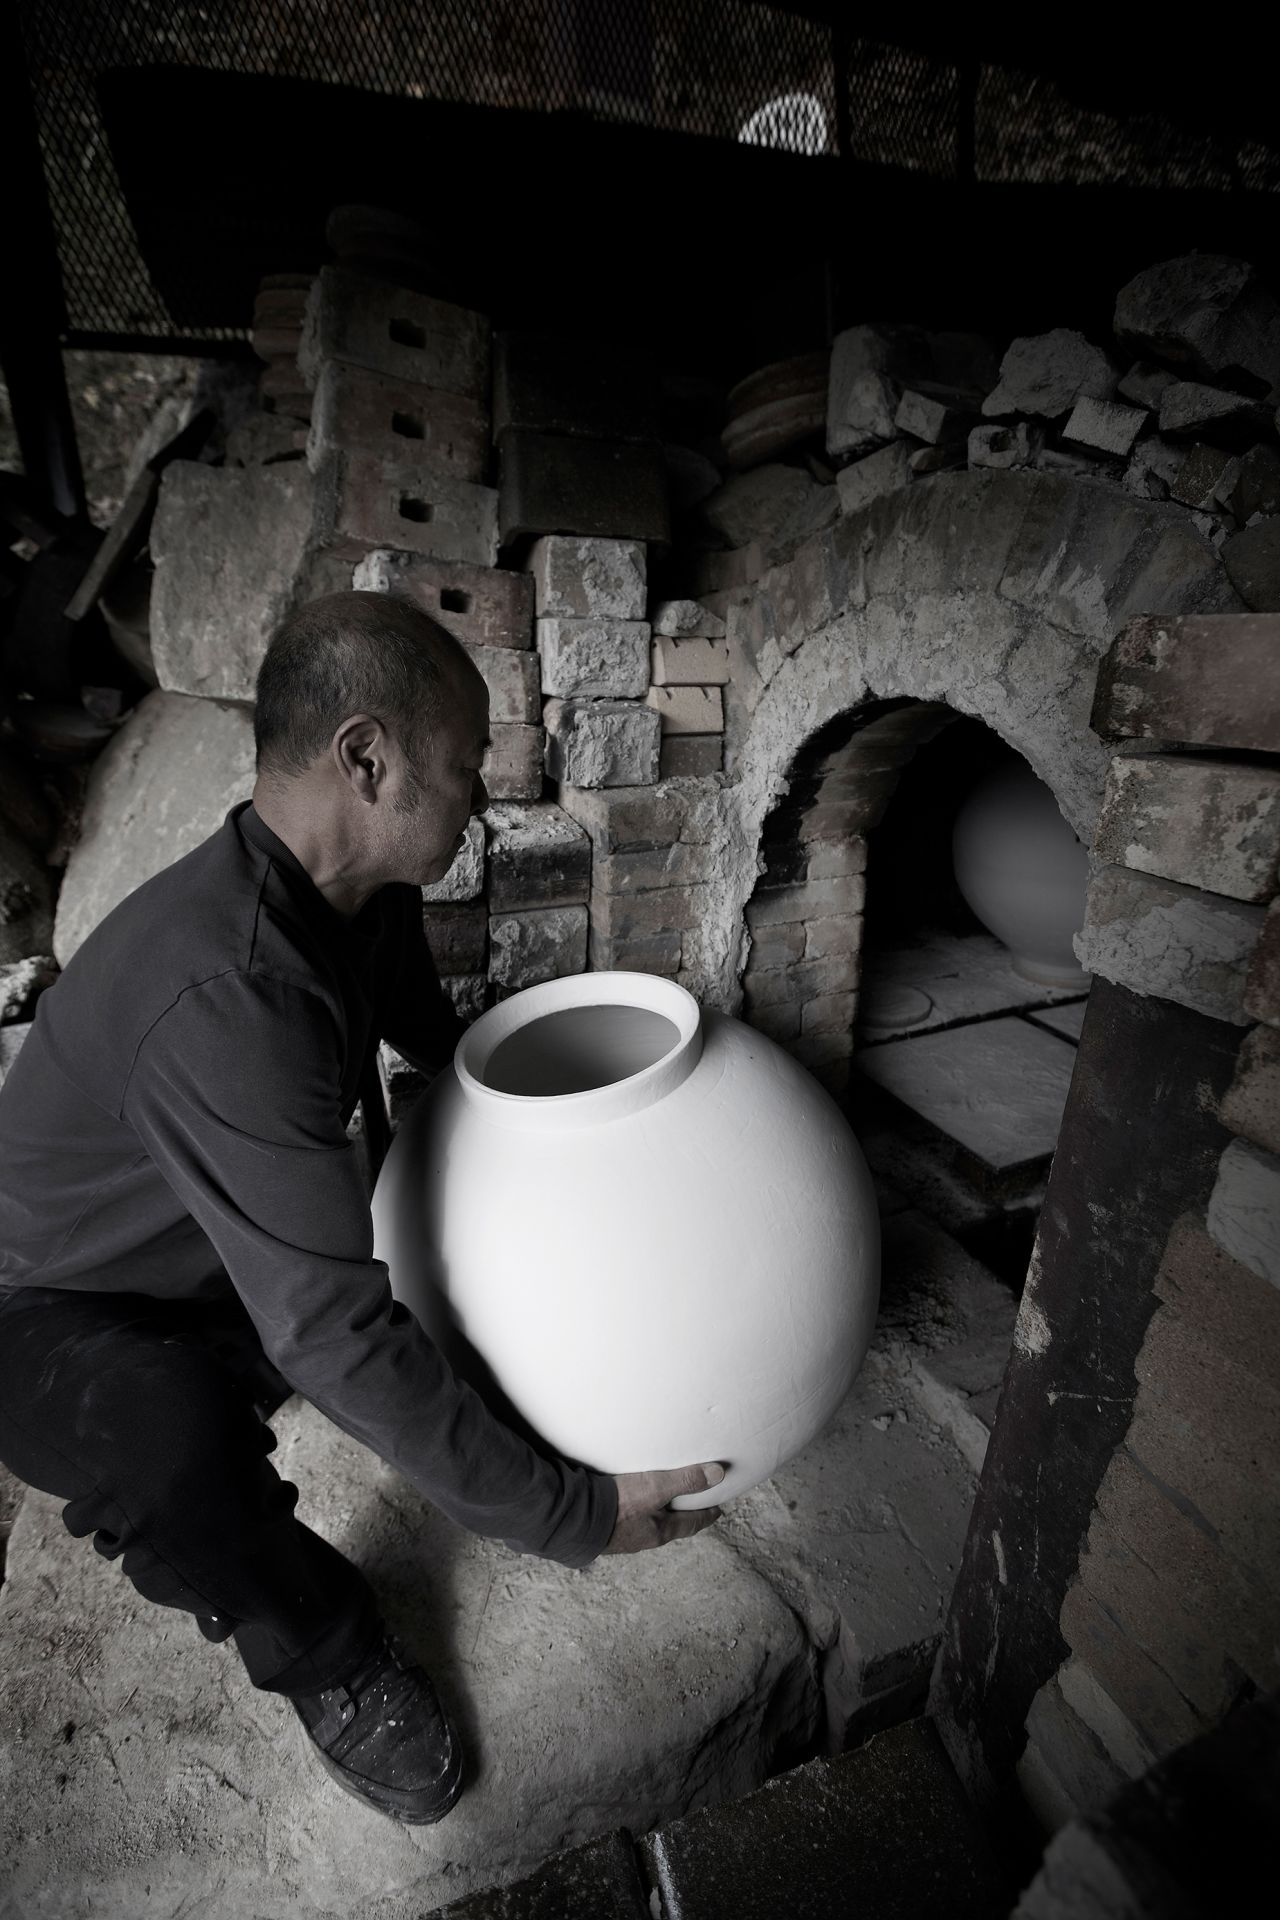 Kwon Dae Sup lifts a large moon jar into a kiln.